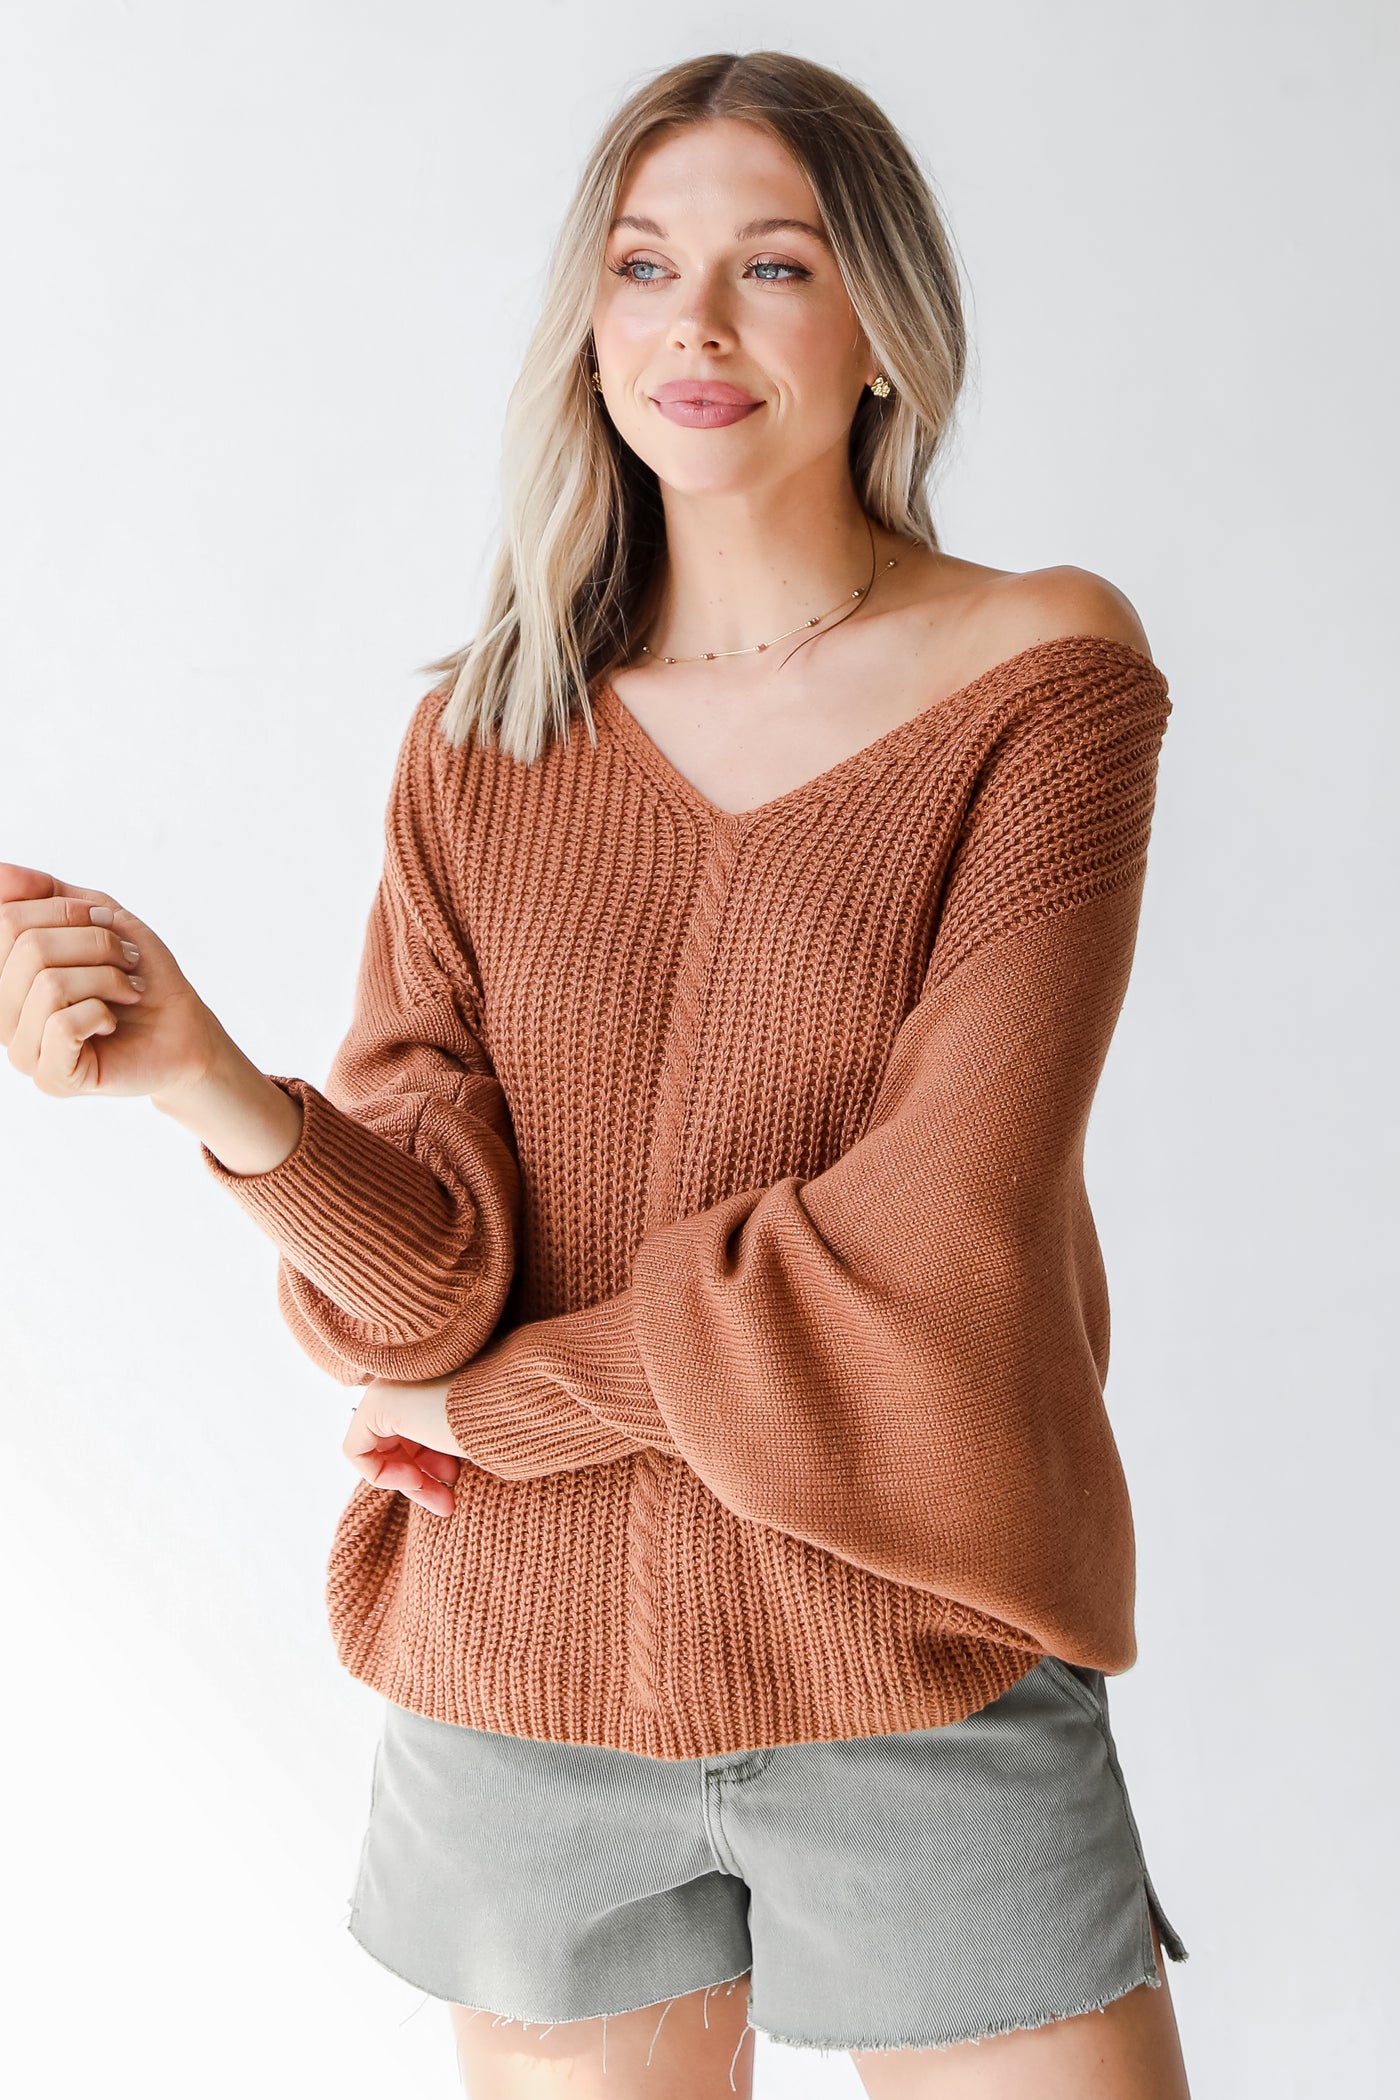 rust sweater on dress up model